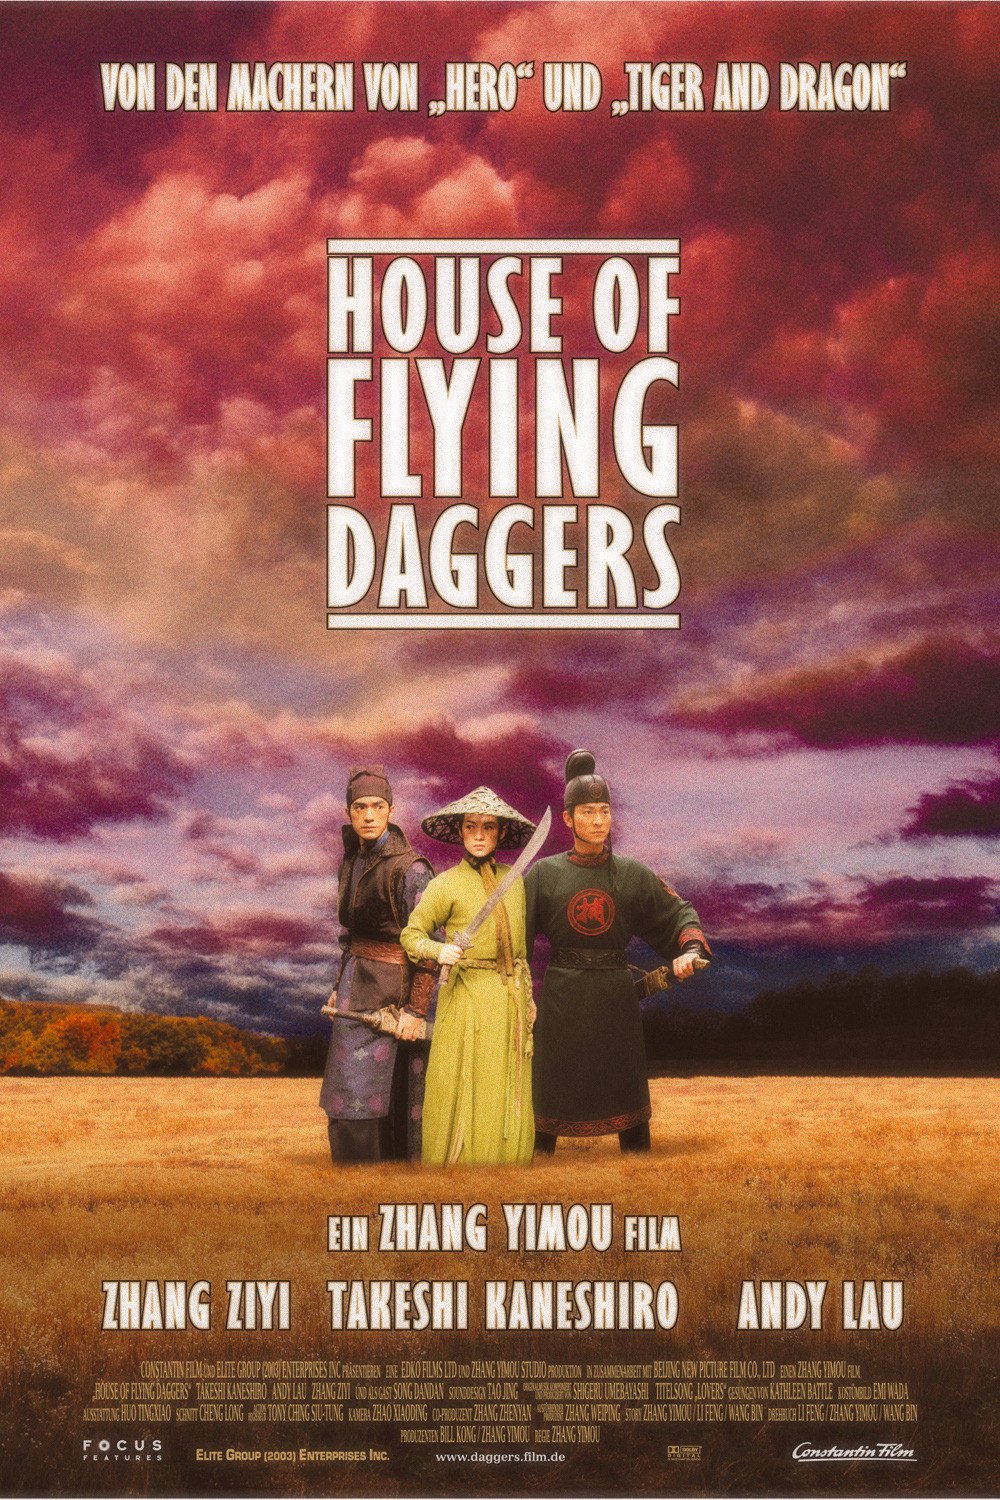 Plakat von "House of Flying Daggers"